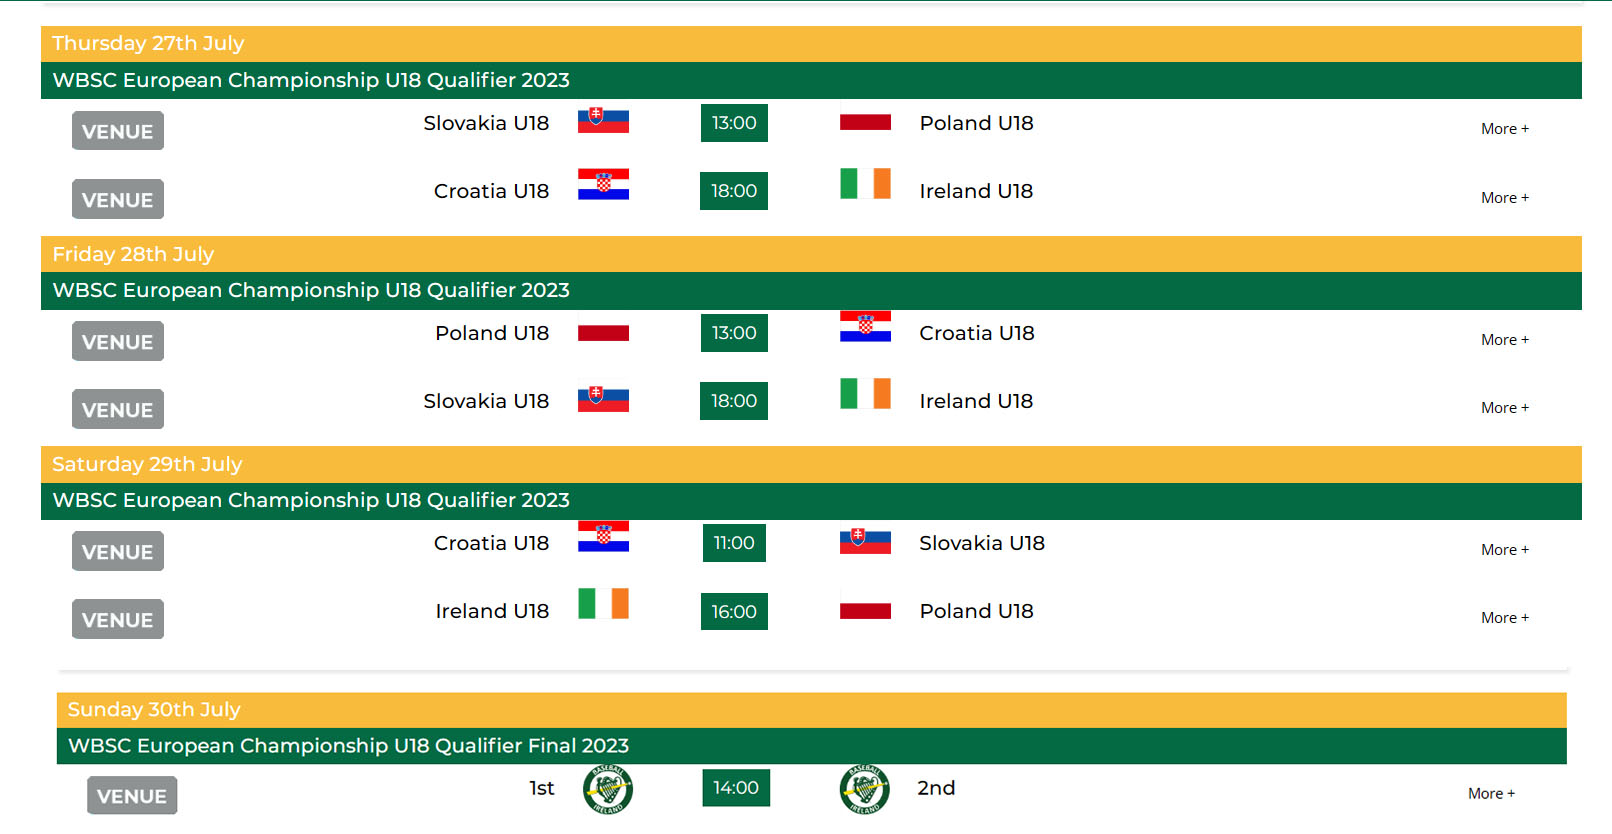 WBSC European Championship U18 Qualifiers Fixtures 2023 Graphic